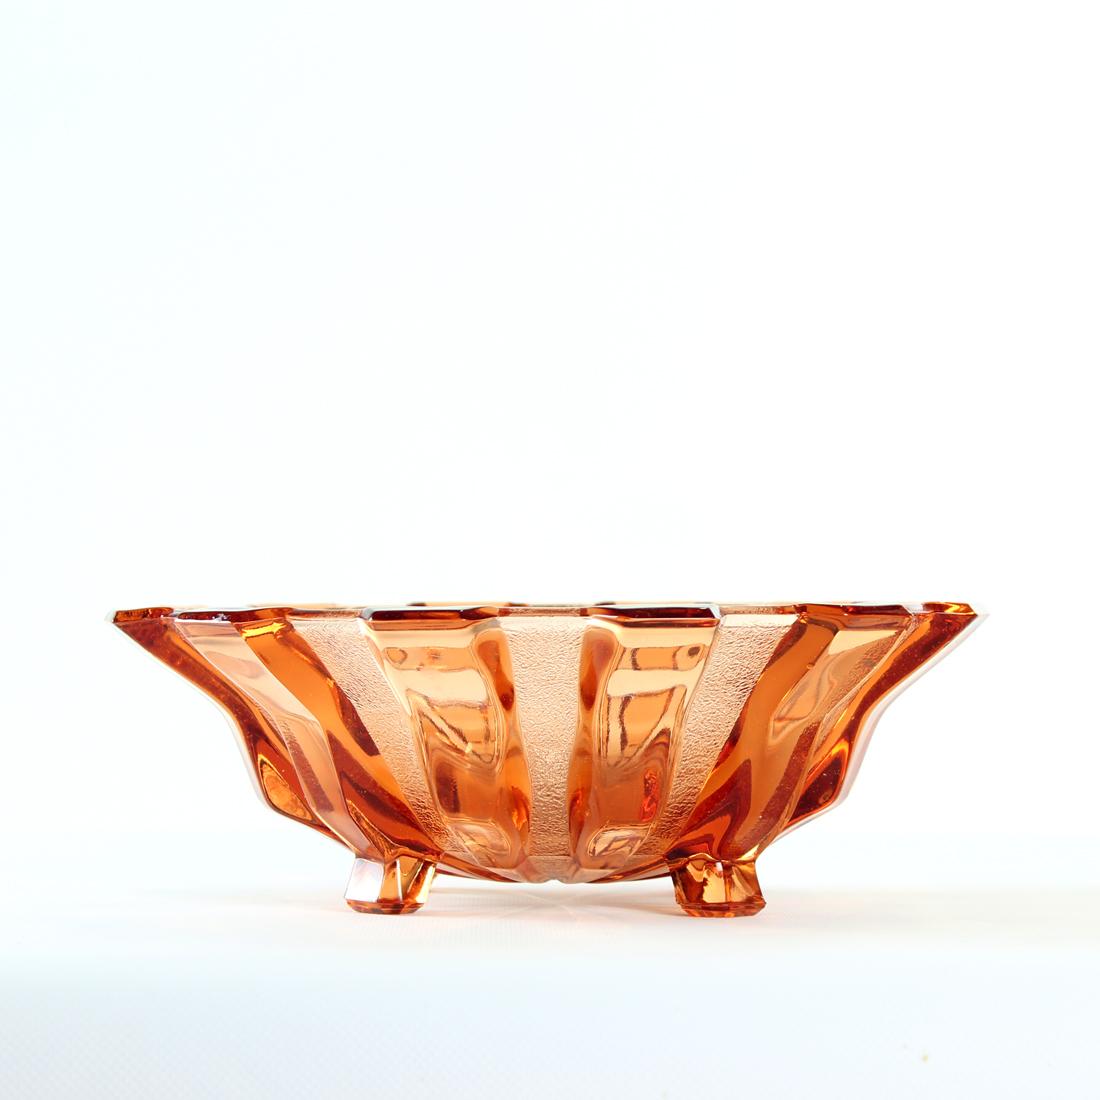 Mid-20th Century Inwald Glass Bowl in Pink Glass, Hermanova Hut, Czechoslovakia 1950s For Sale